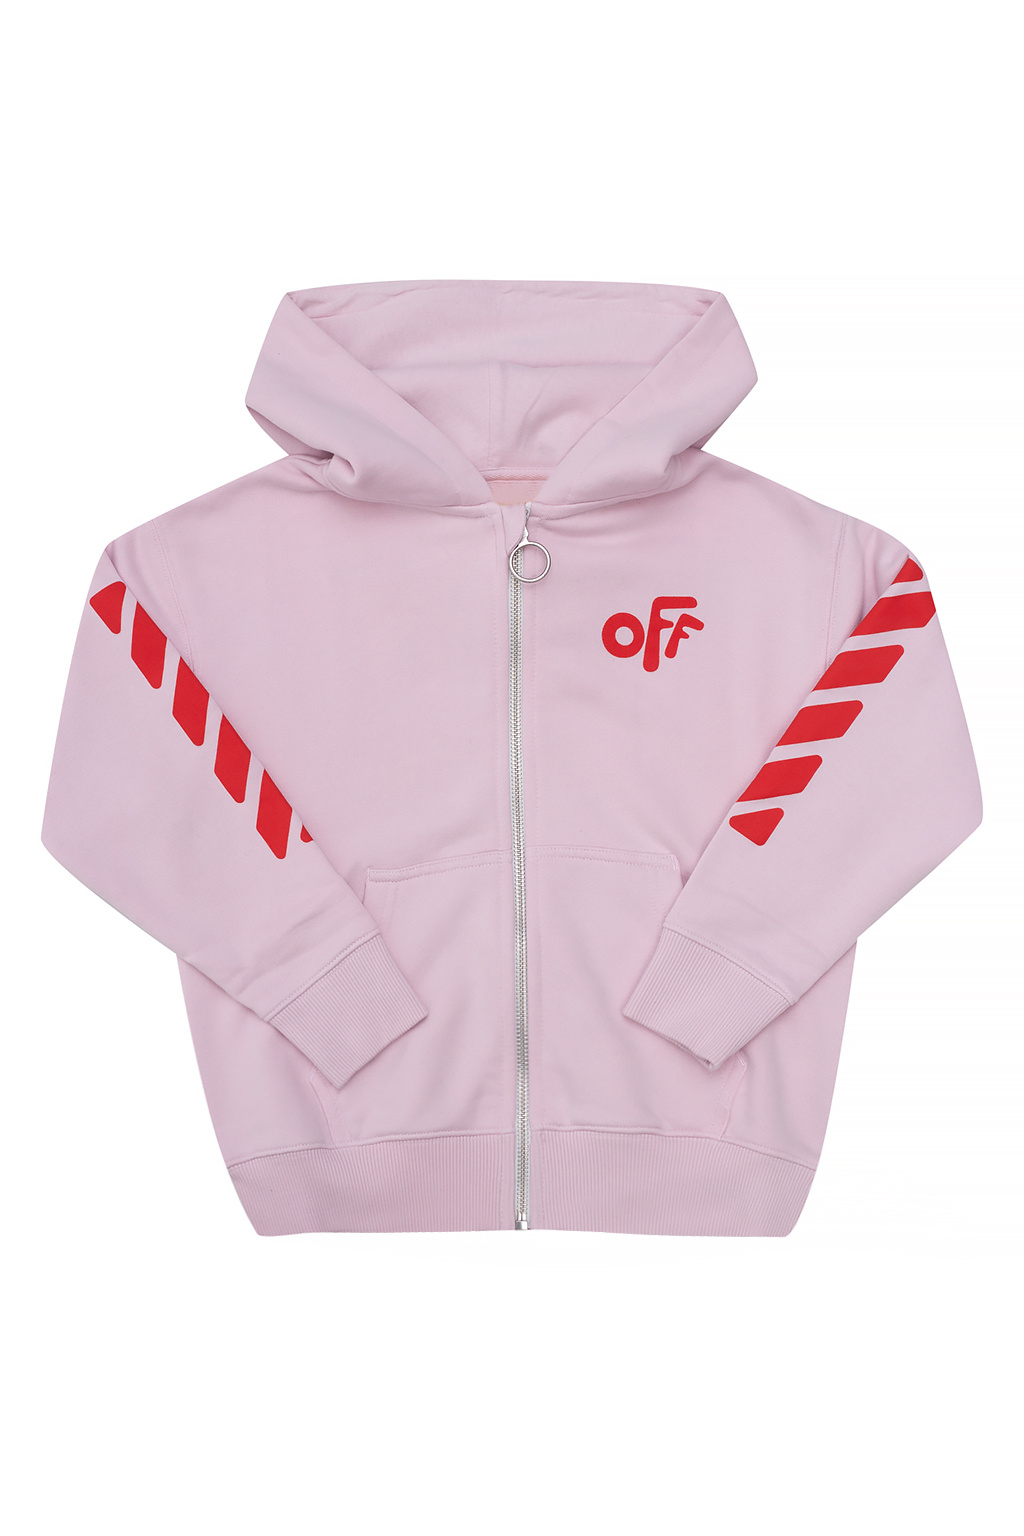 Off-White Kids Windbreakers sweatshirt with logo